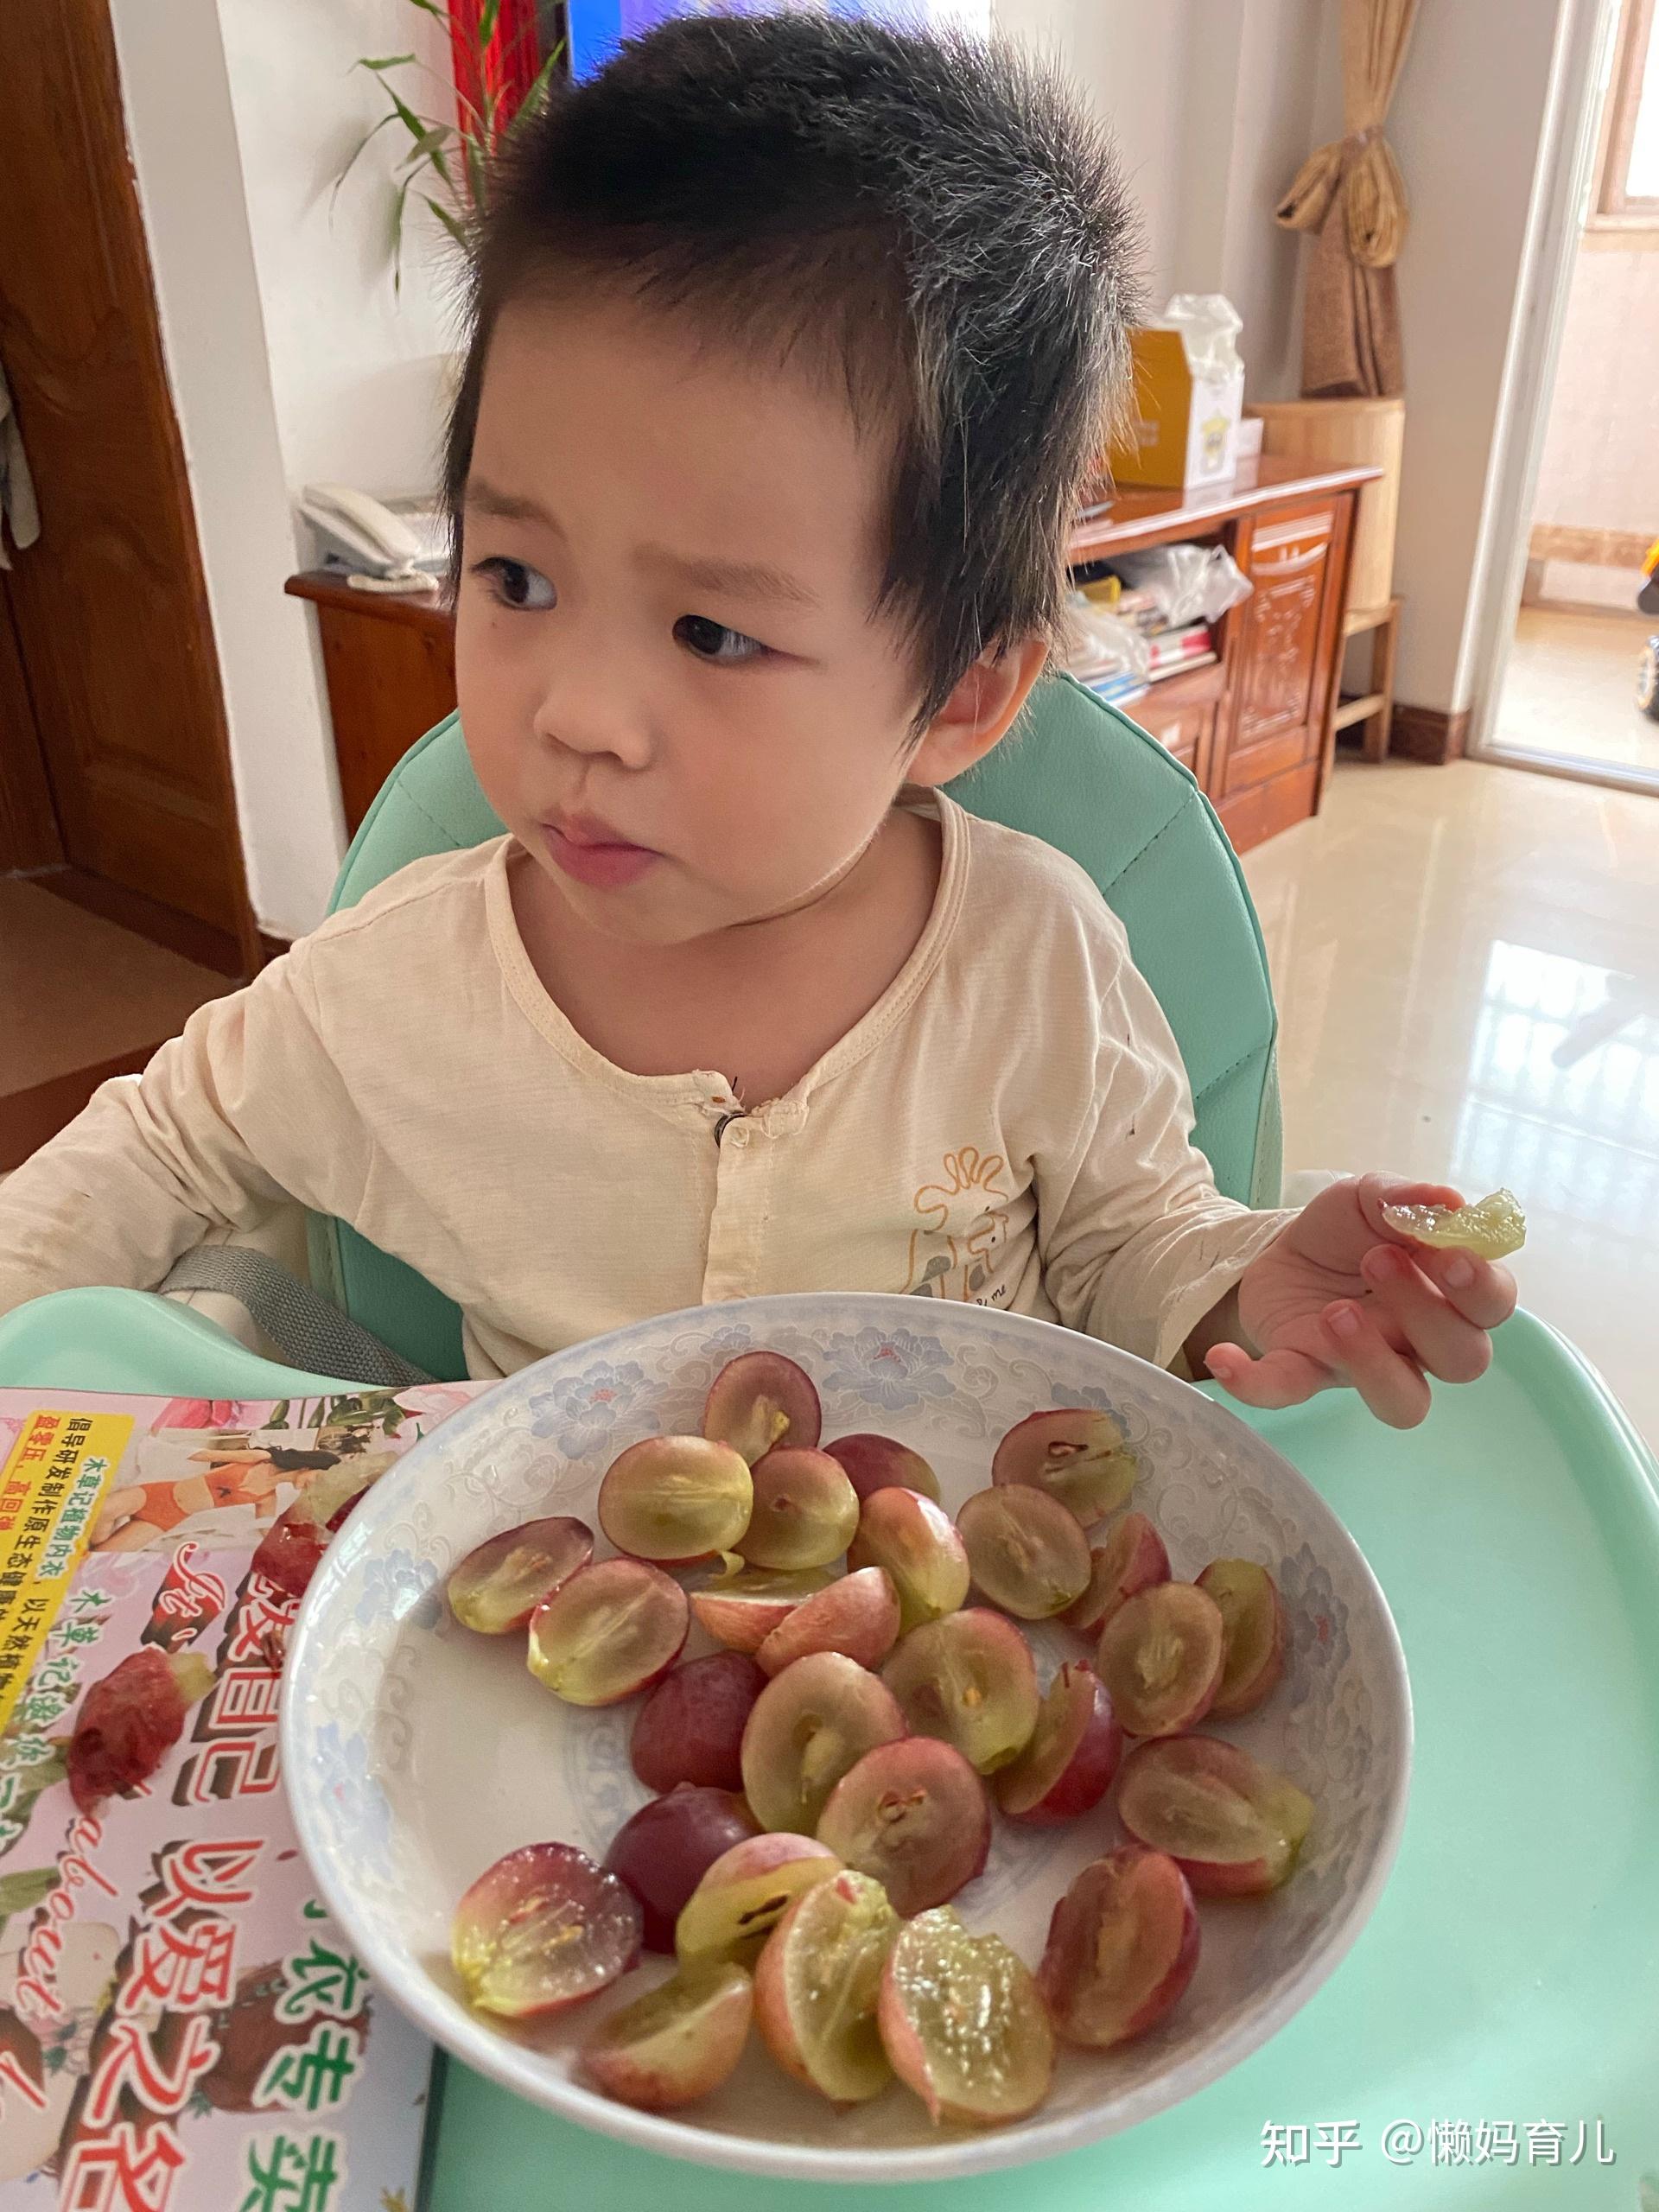 【YIYU】日本妹子吃水果 声控_哔哩哔哩_bilibili